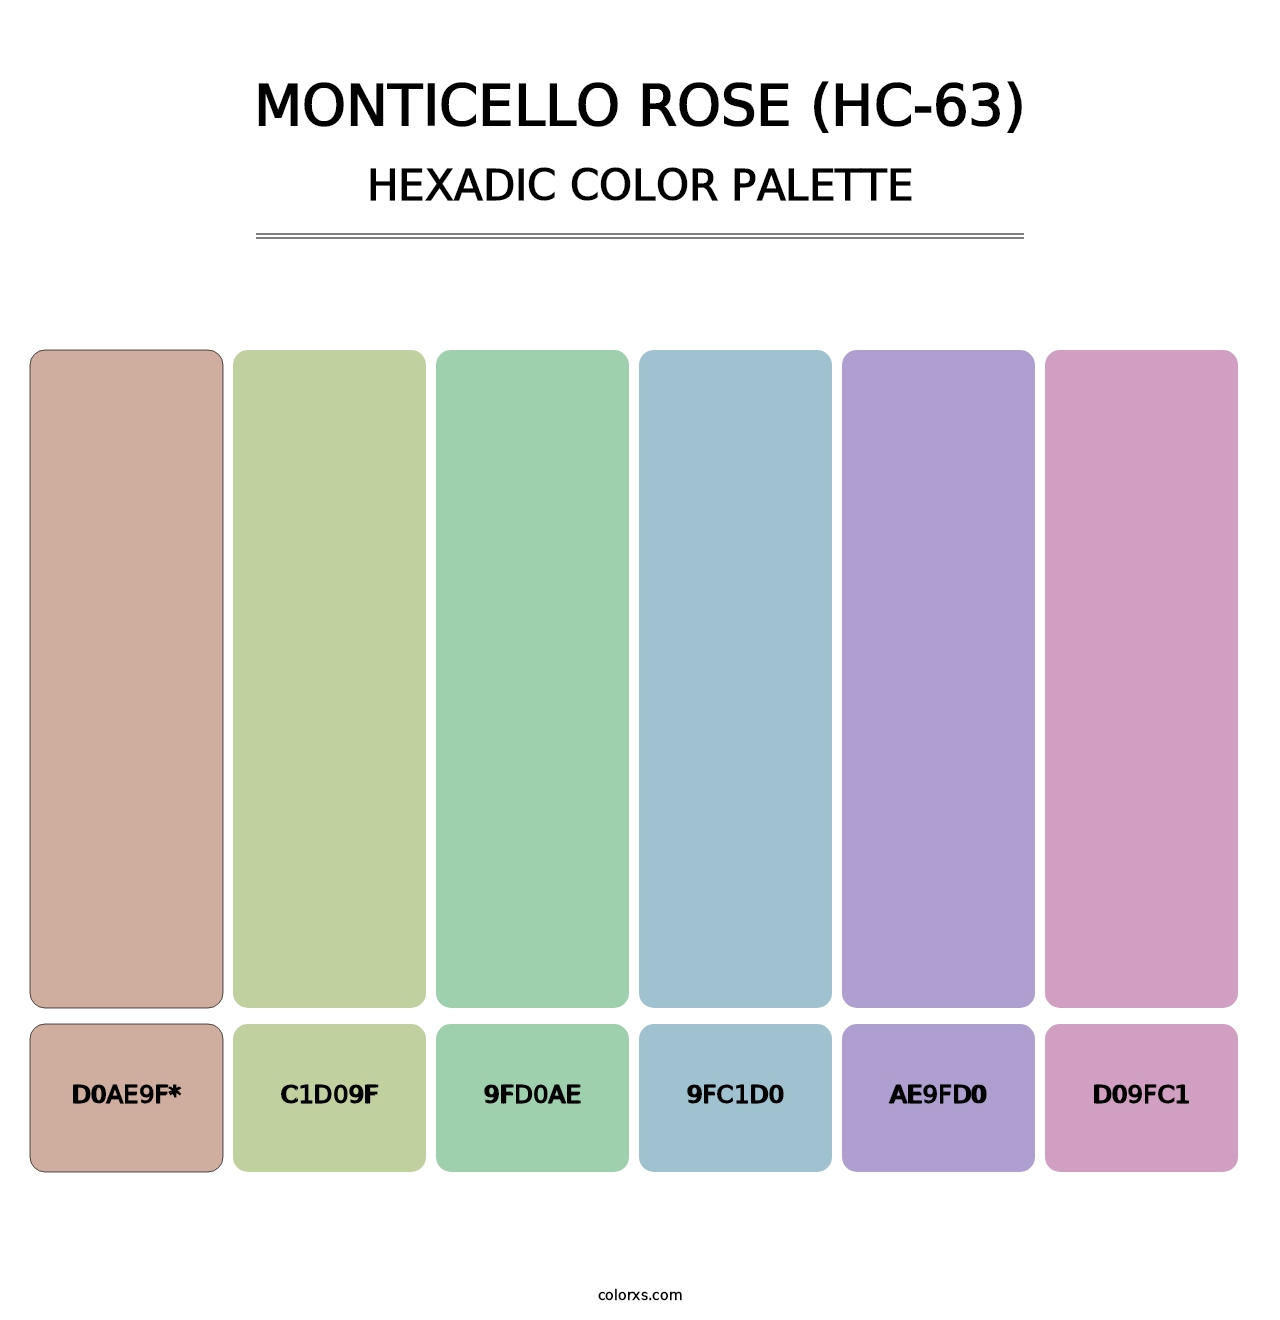 Monticello Rose (HC-63) - Hexadic Color Palette